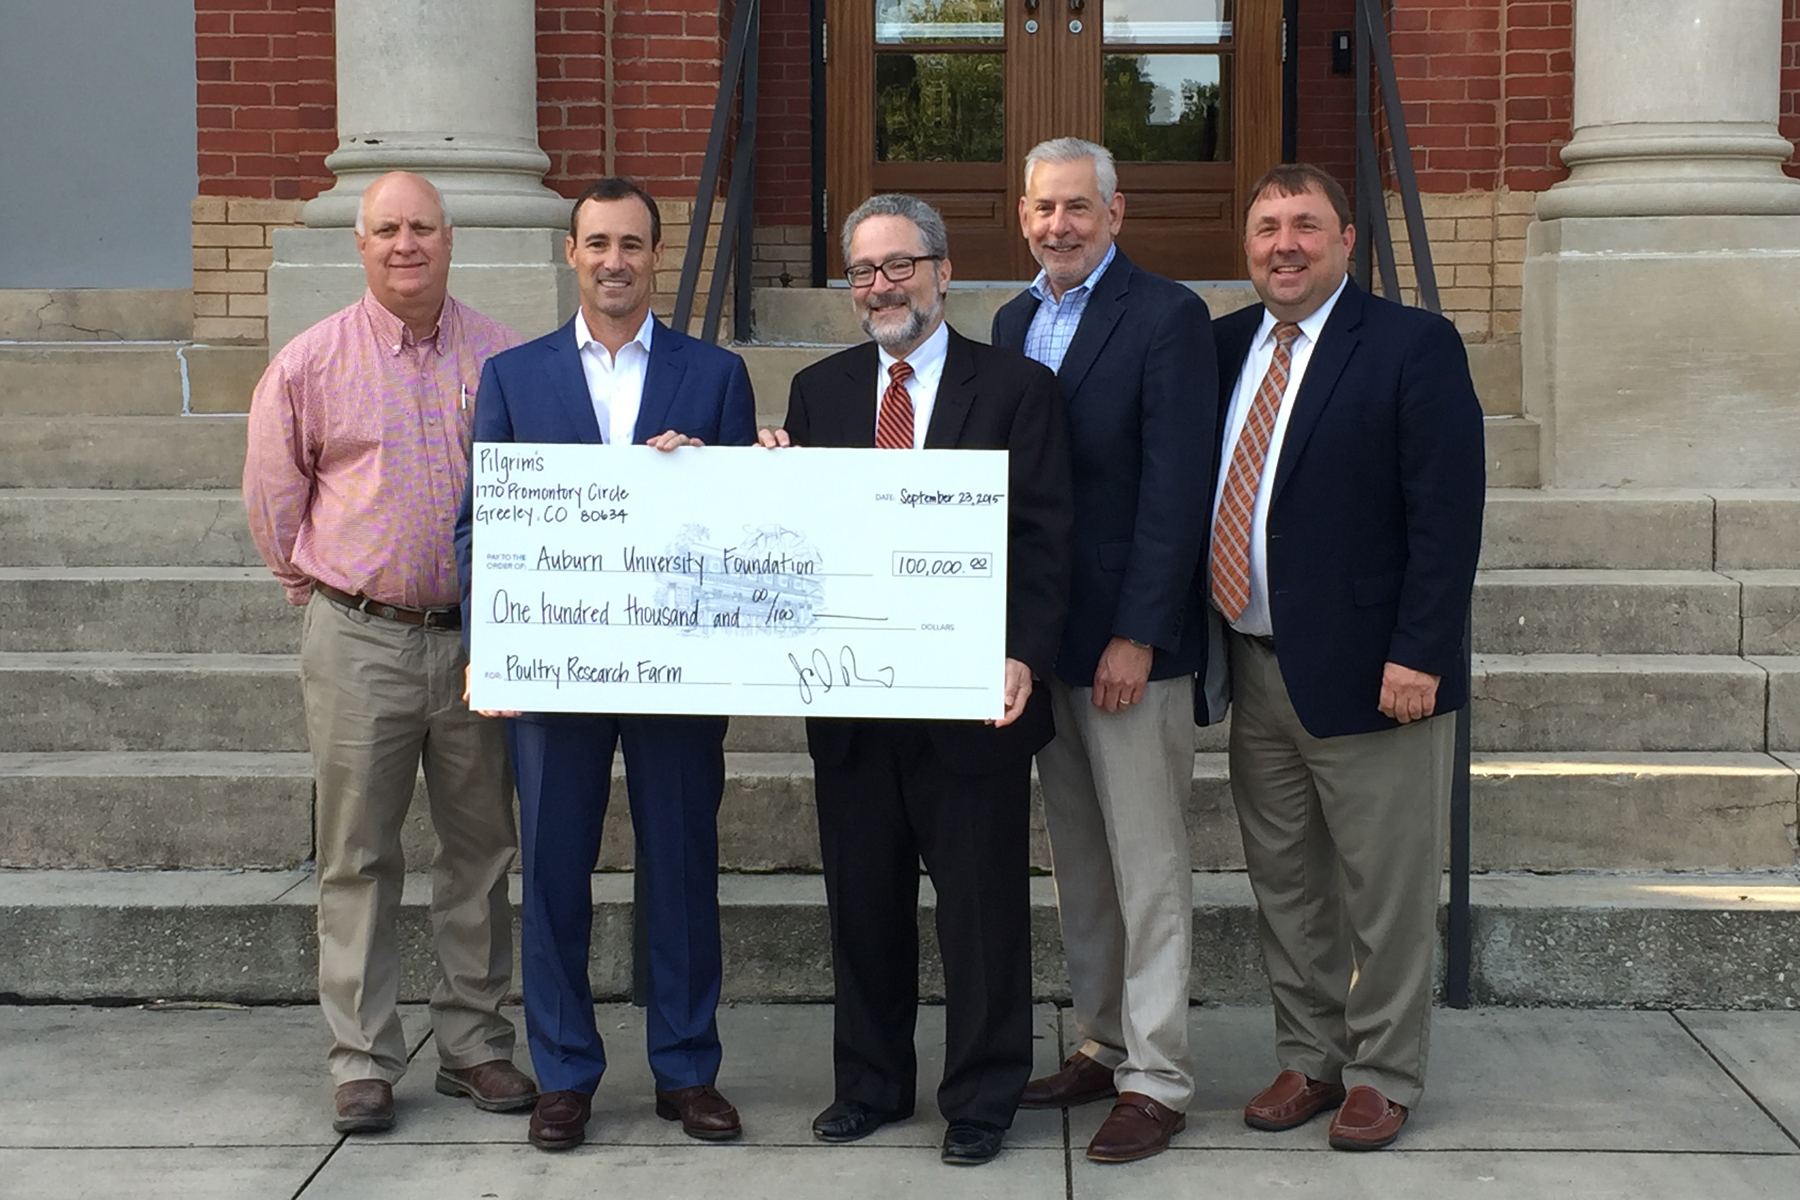 Pilgrim's Donates $100,000 to Auburn University Poultry Research Farm